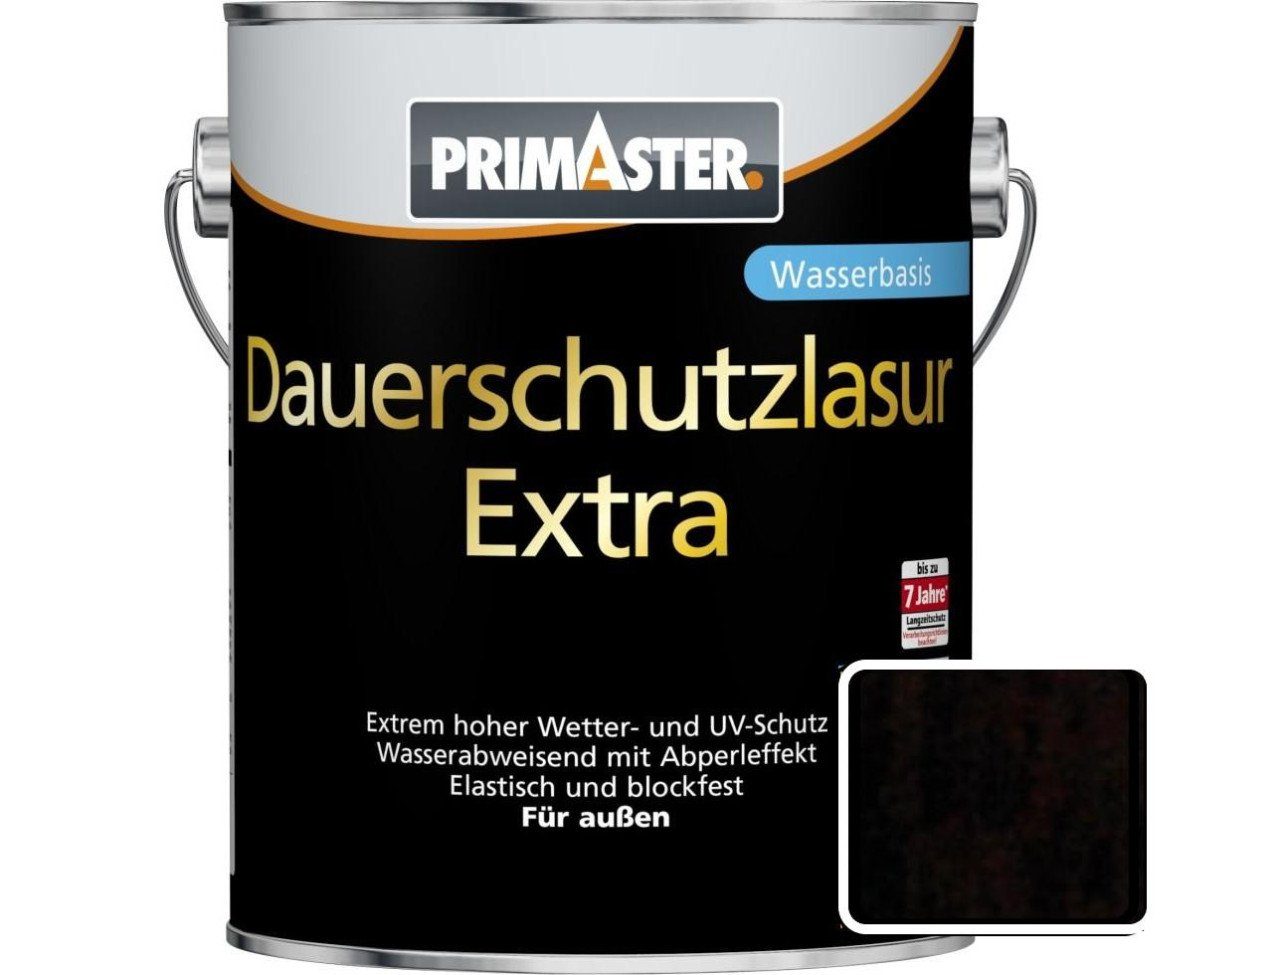 Extra L 2,5 Dauerschutzlasur Lasur Primaster Primaster palisander